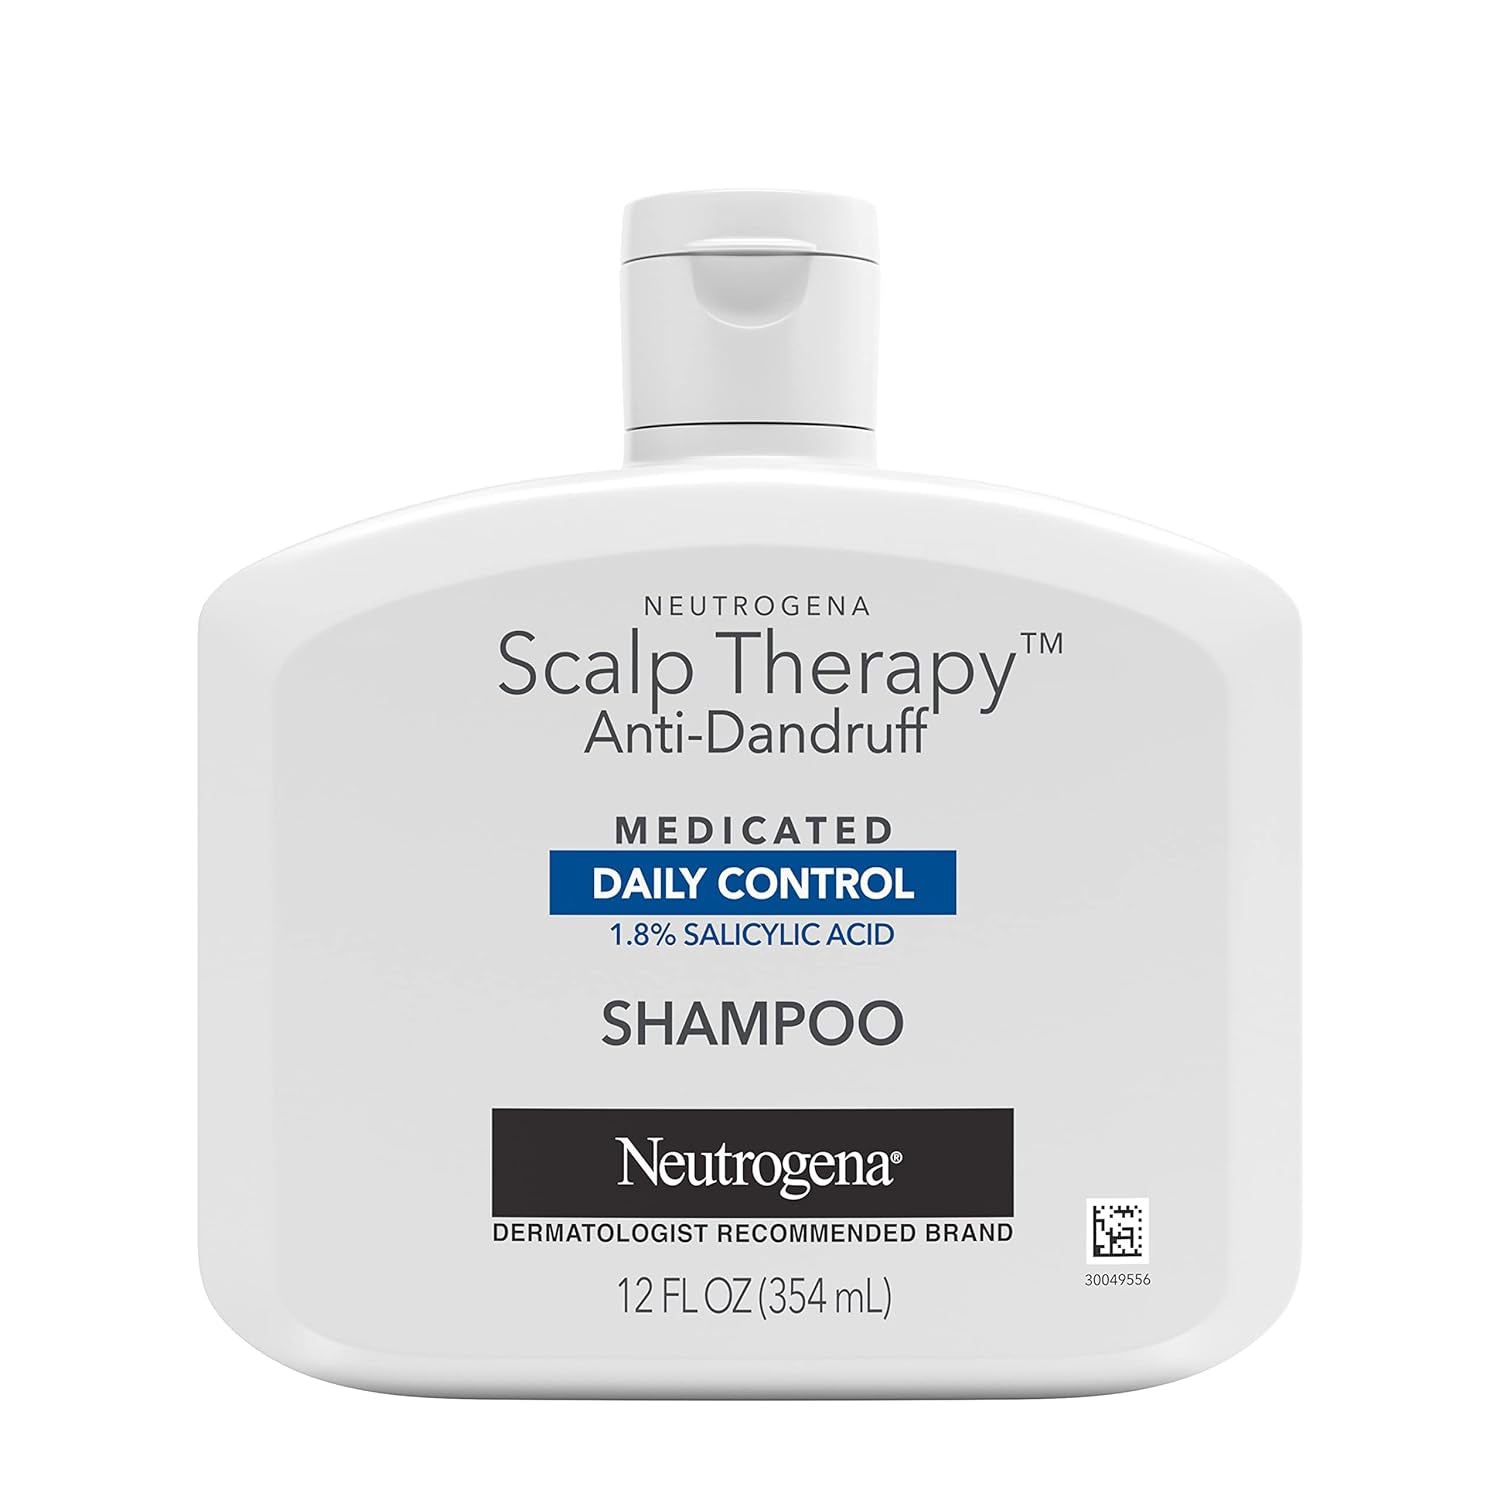 Neutrogena Scalp Therapy Anti-Dandruff Shampoo Daily Control, 1.8% Salicylic Acid, with Fragrance of Warm Vanilla & Toasted Coconut Notes, 12 Fl Oz